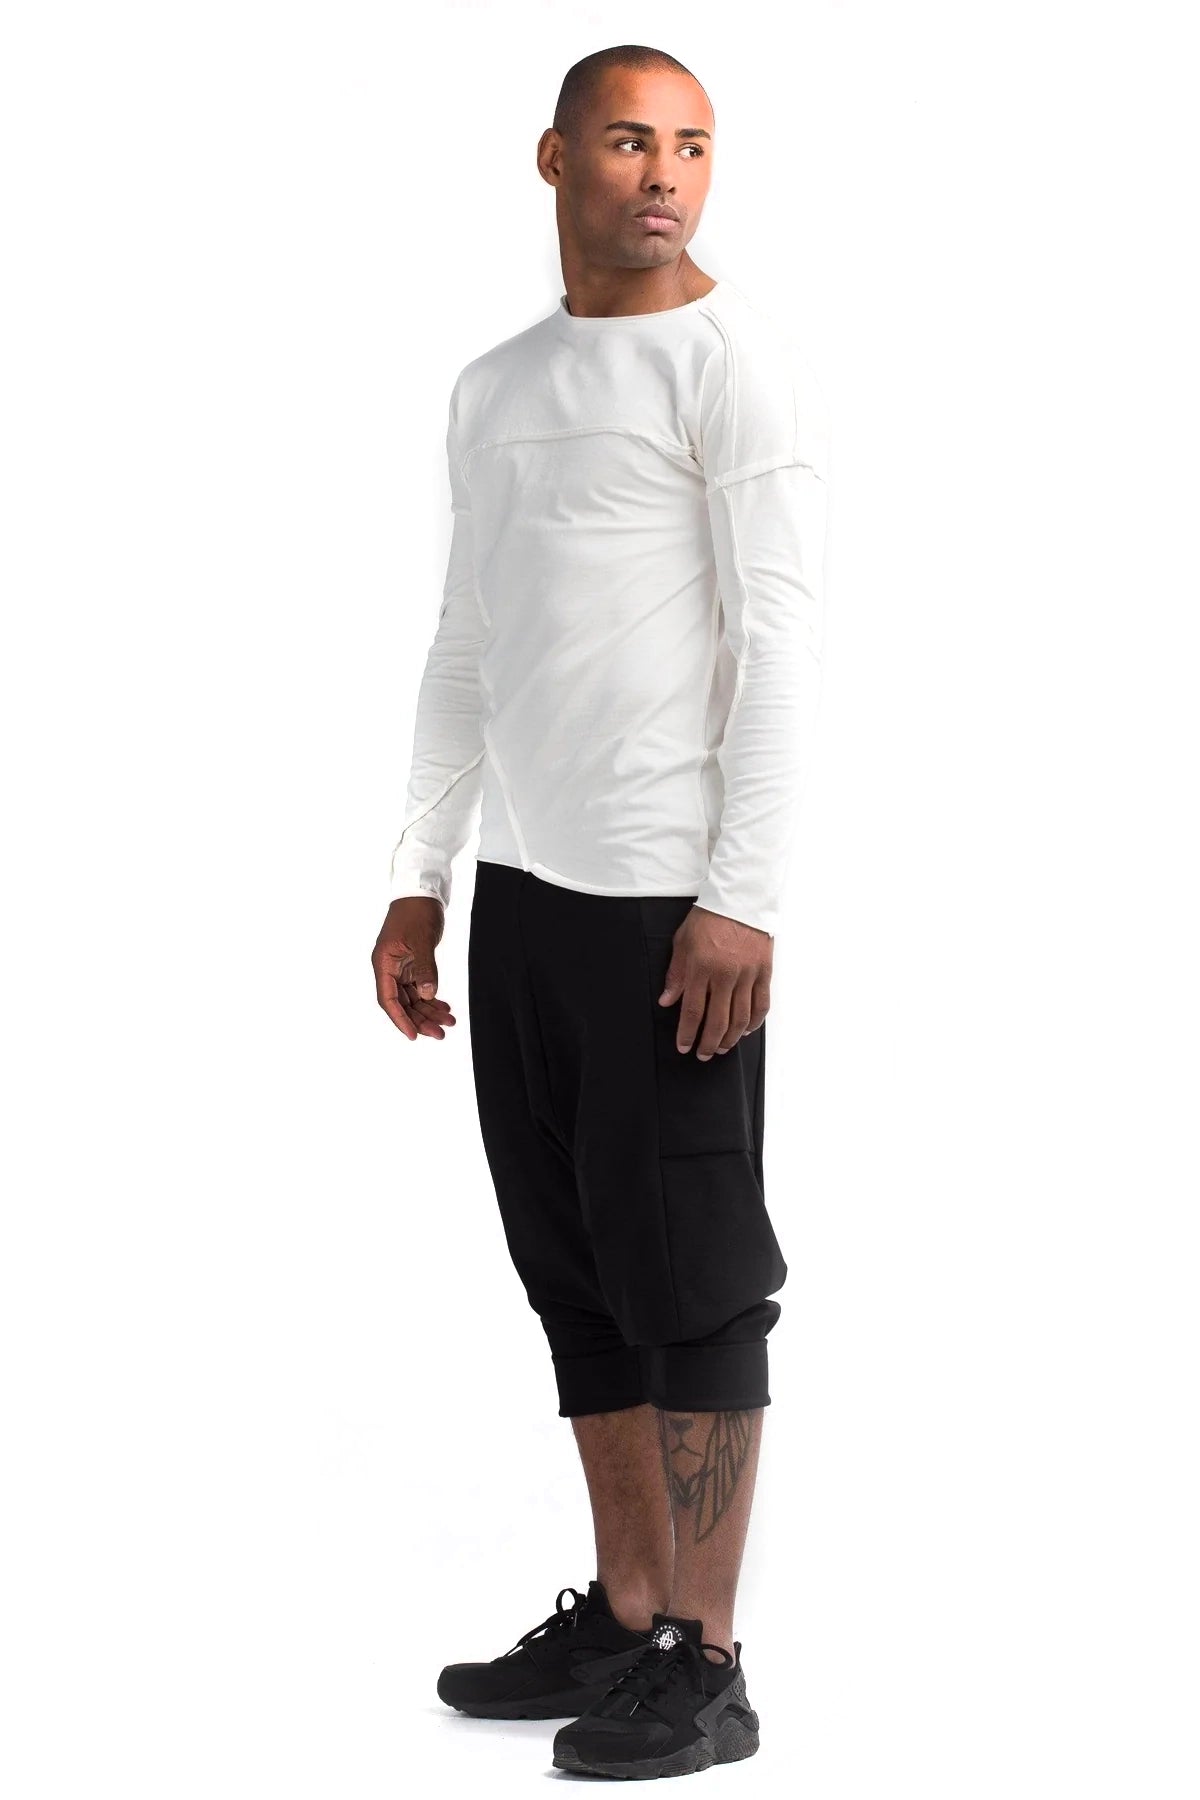 Bundle: Black & White Long Sleeve T-shirt